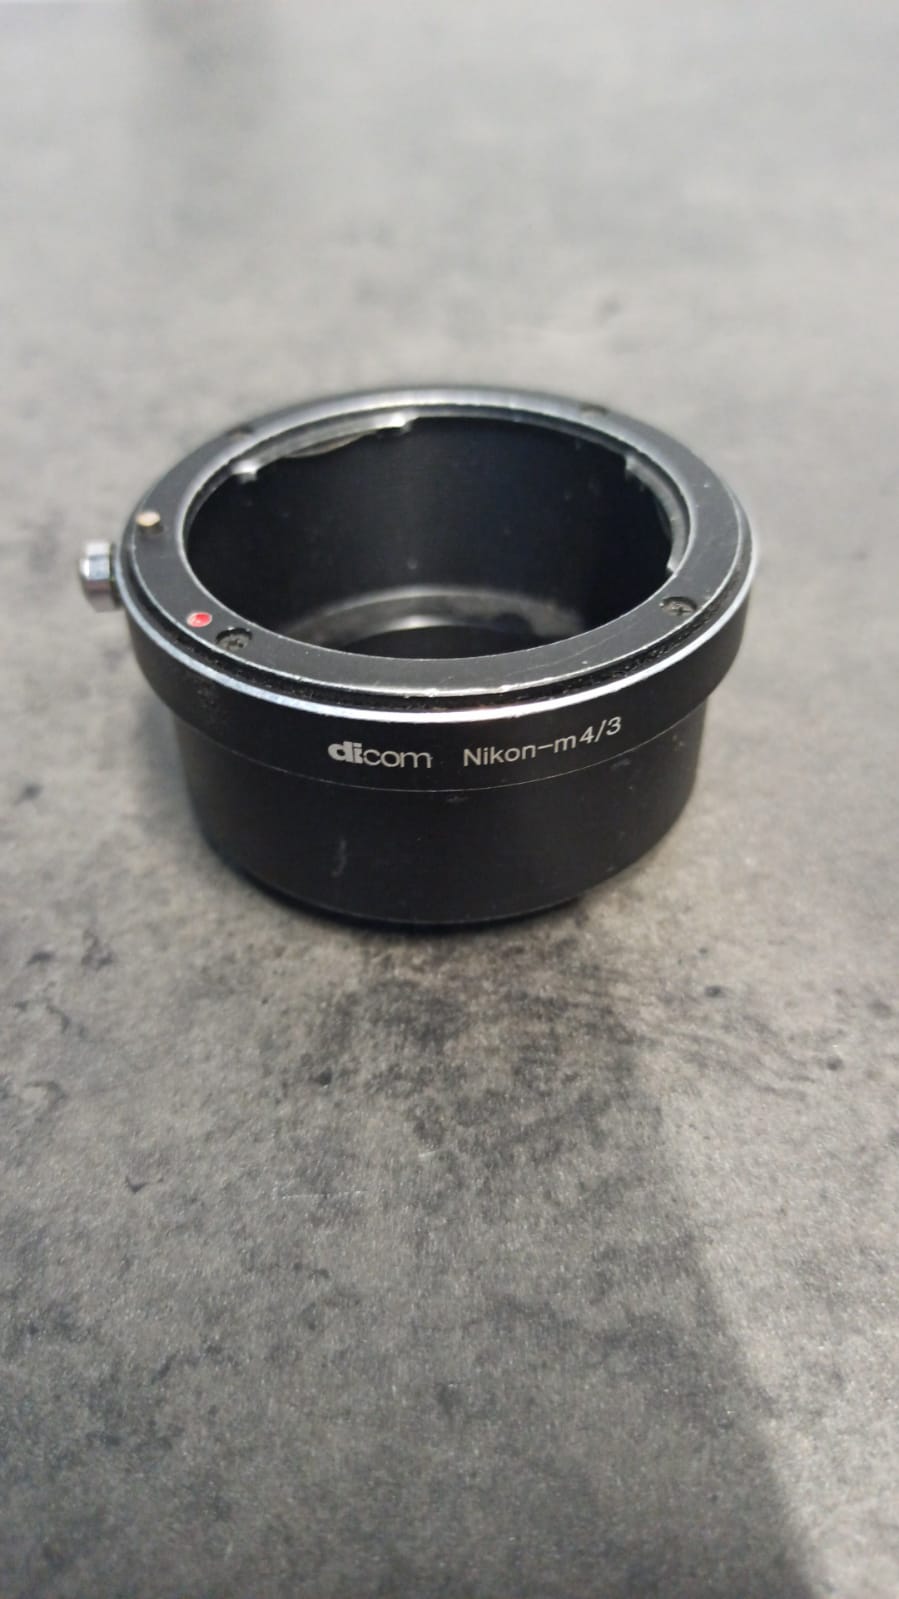 Адаптер Nikon-MFT 4/3 dicom  в магазине RentaPhoto.Store